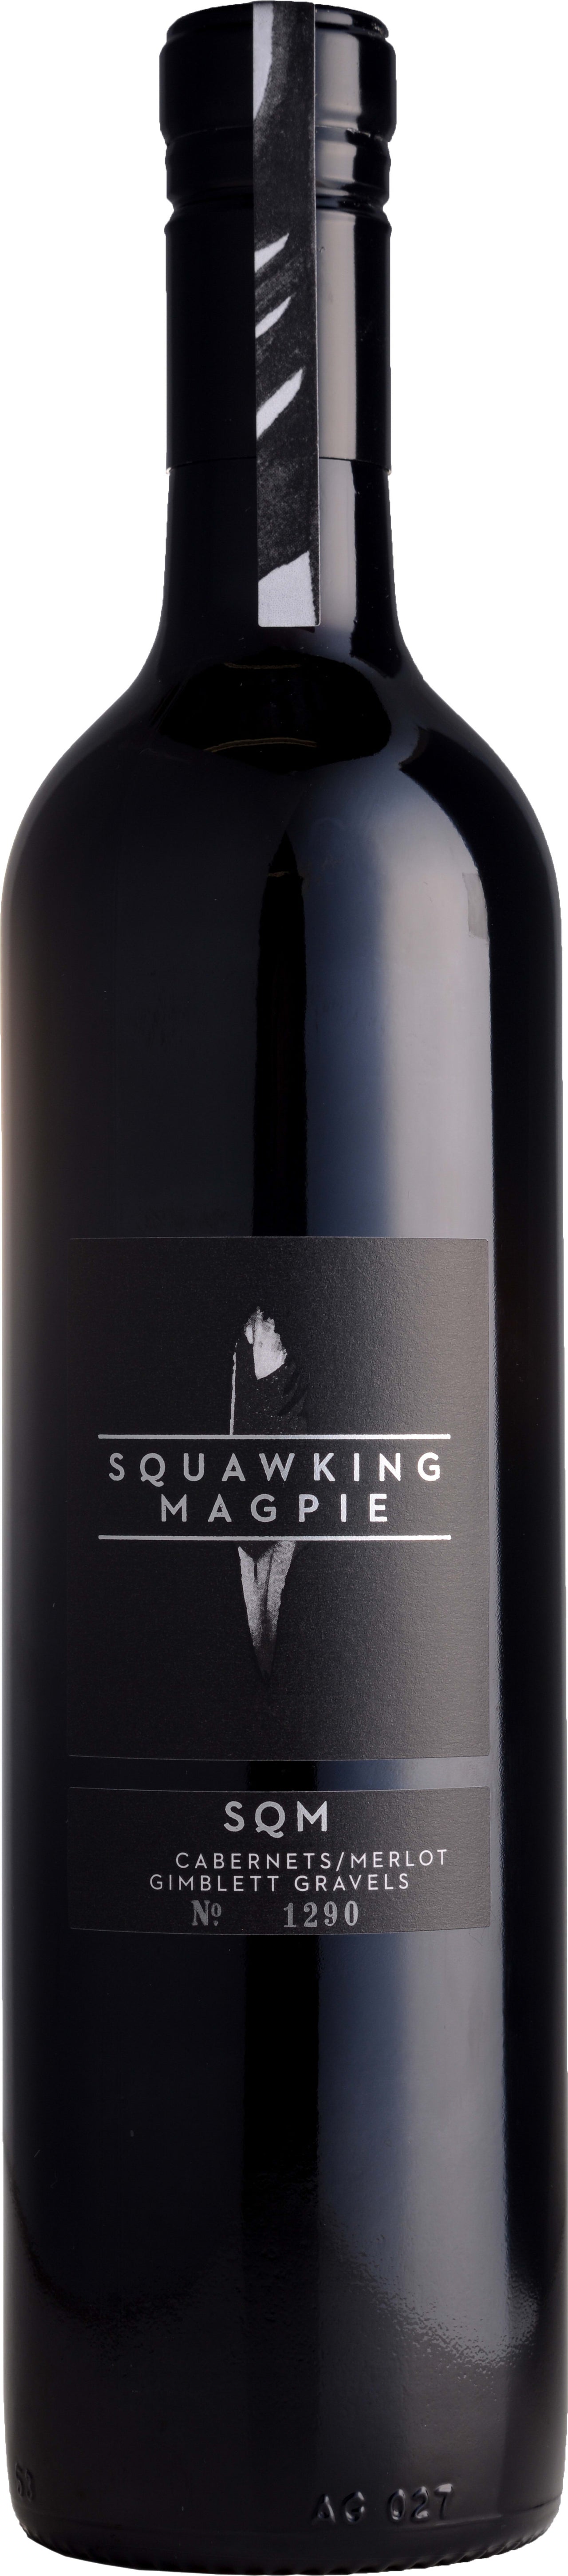 Squawking Magpie SQM Cabernet Sauvignon, Merlot, Cabernet Franc 2016 75cl - Buy Squawking Magpie Wines from GREAT WINES DIRECT wine shop